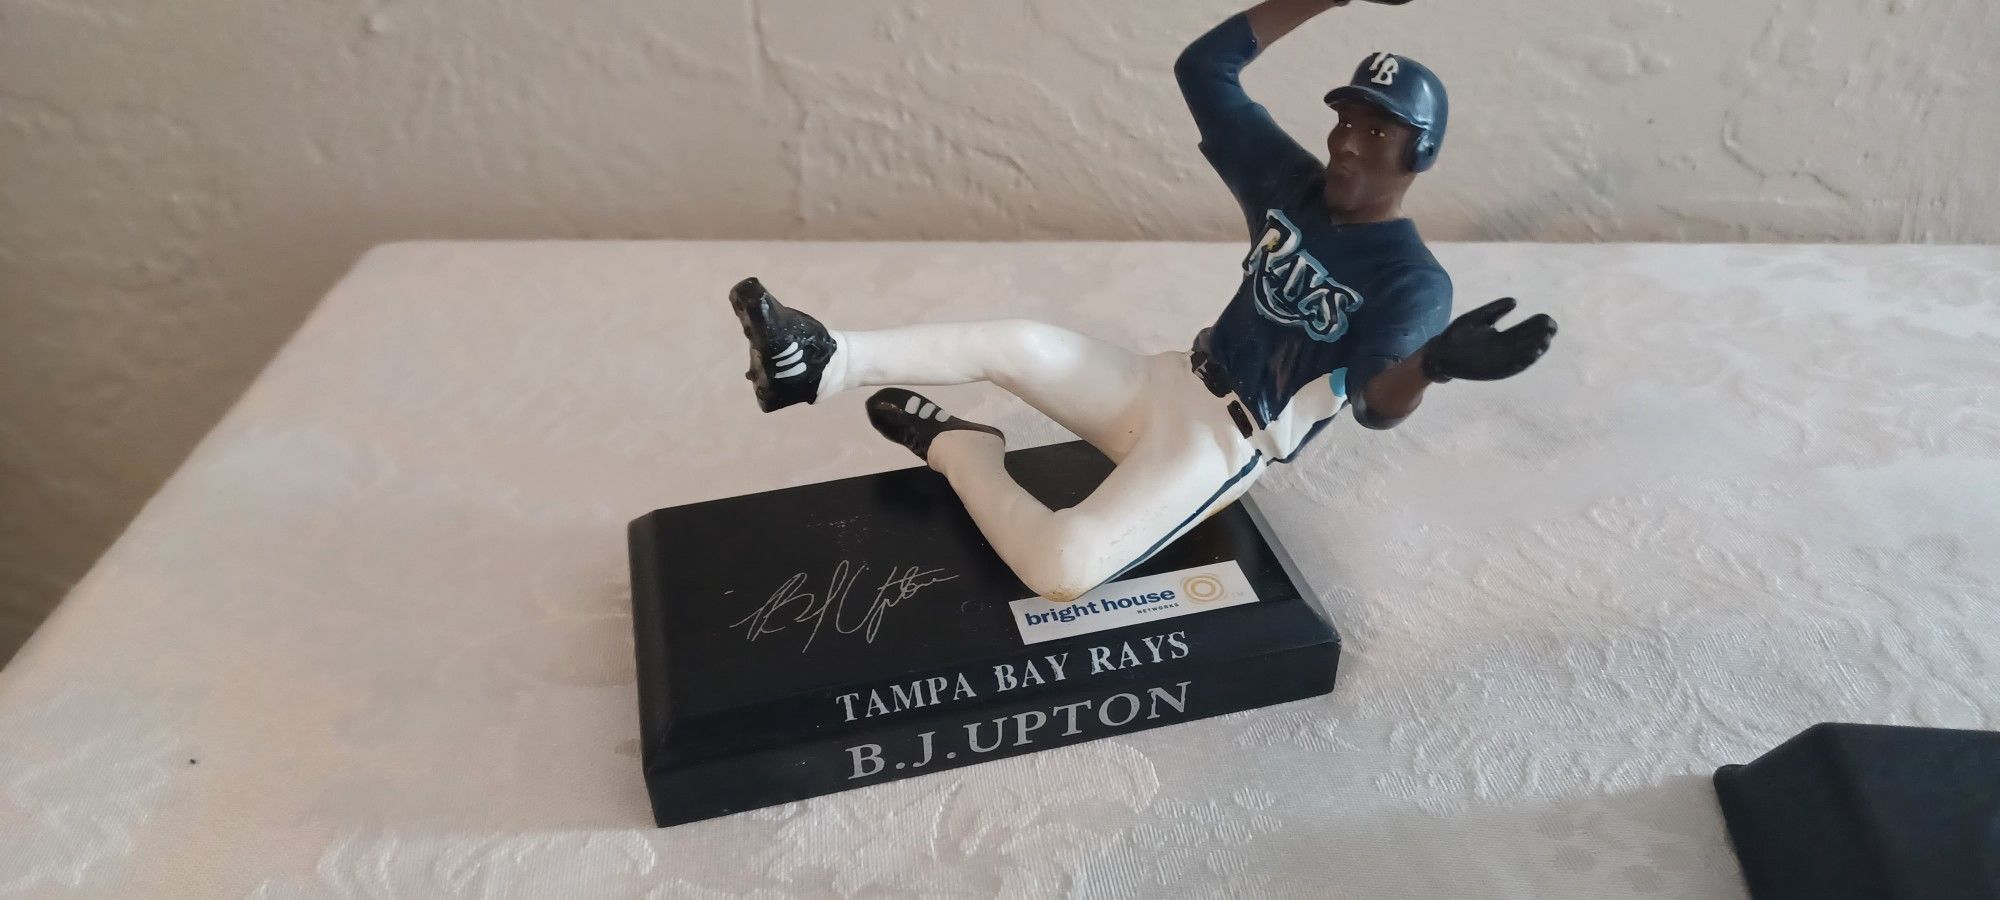 Tampa Bay Rays B.J. Upton SGA Figure MLB Baseball 08/02/08~Baseball Memorabilia 